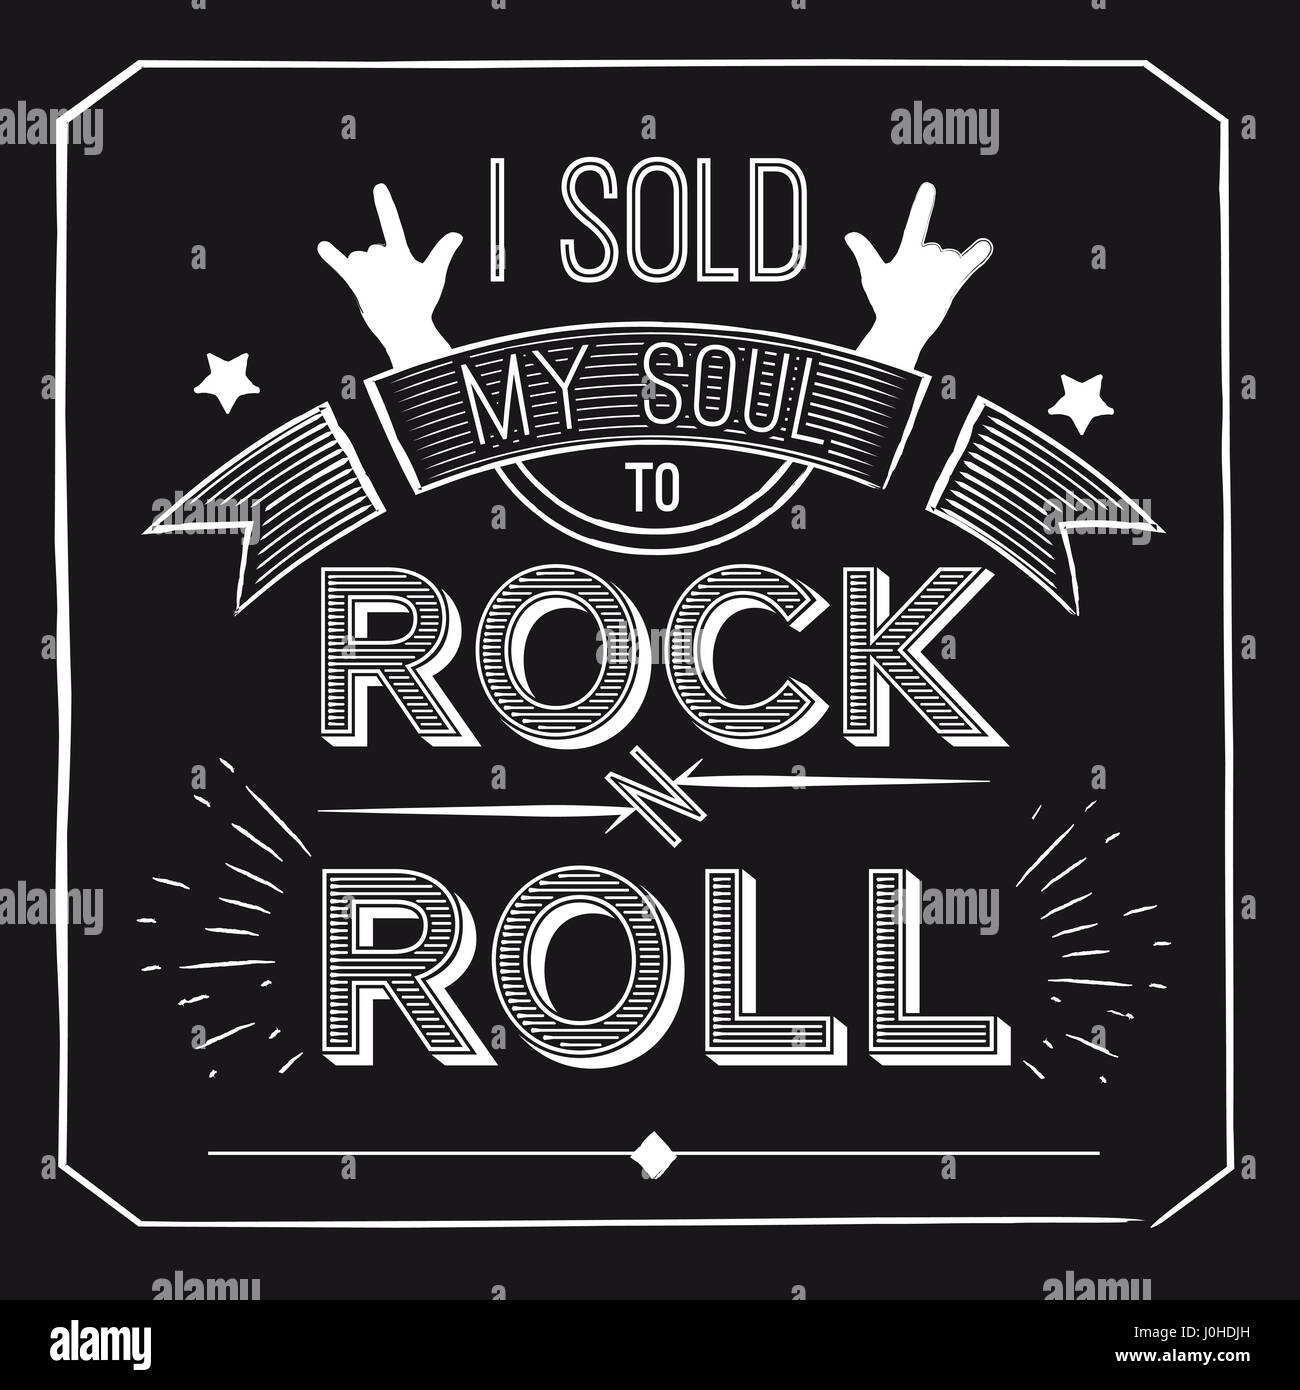 Cotización de vectores sobre roca - he vendido mi alma a -n-roll. Concepto de diseño musical para camisetas, carteles, logotipos, cubiertas de CD. Ilustración. Ilustración del Vector